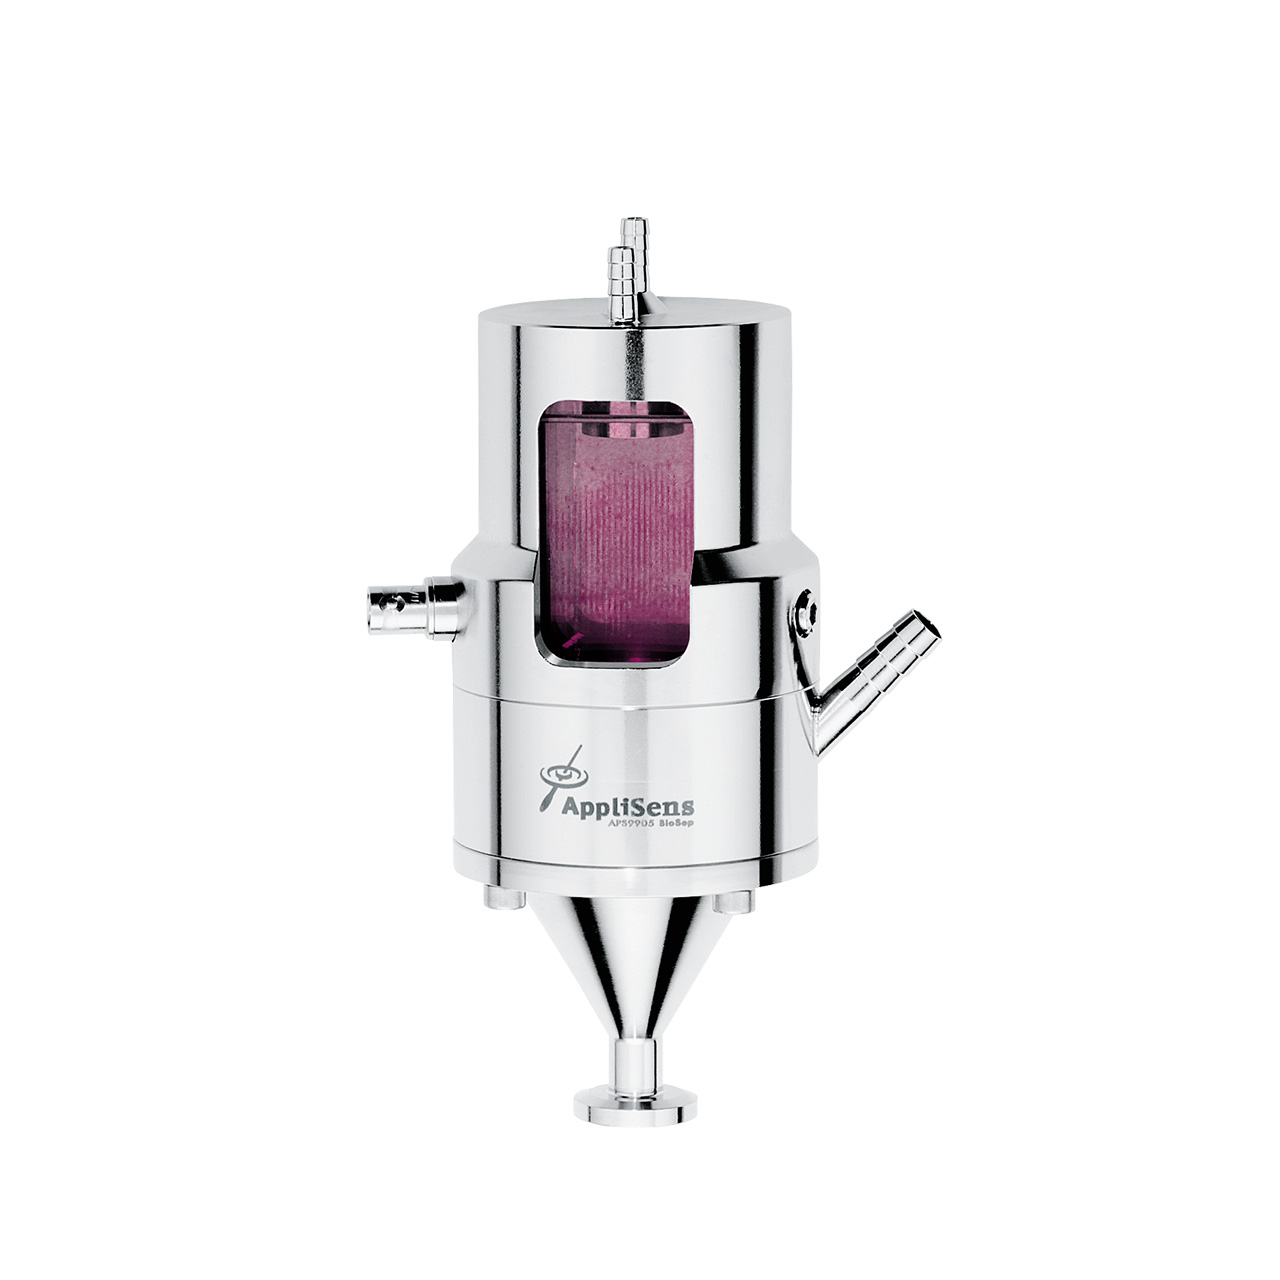 The Applikon BioSep 50 liter perfusion device